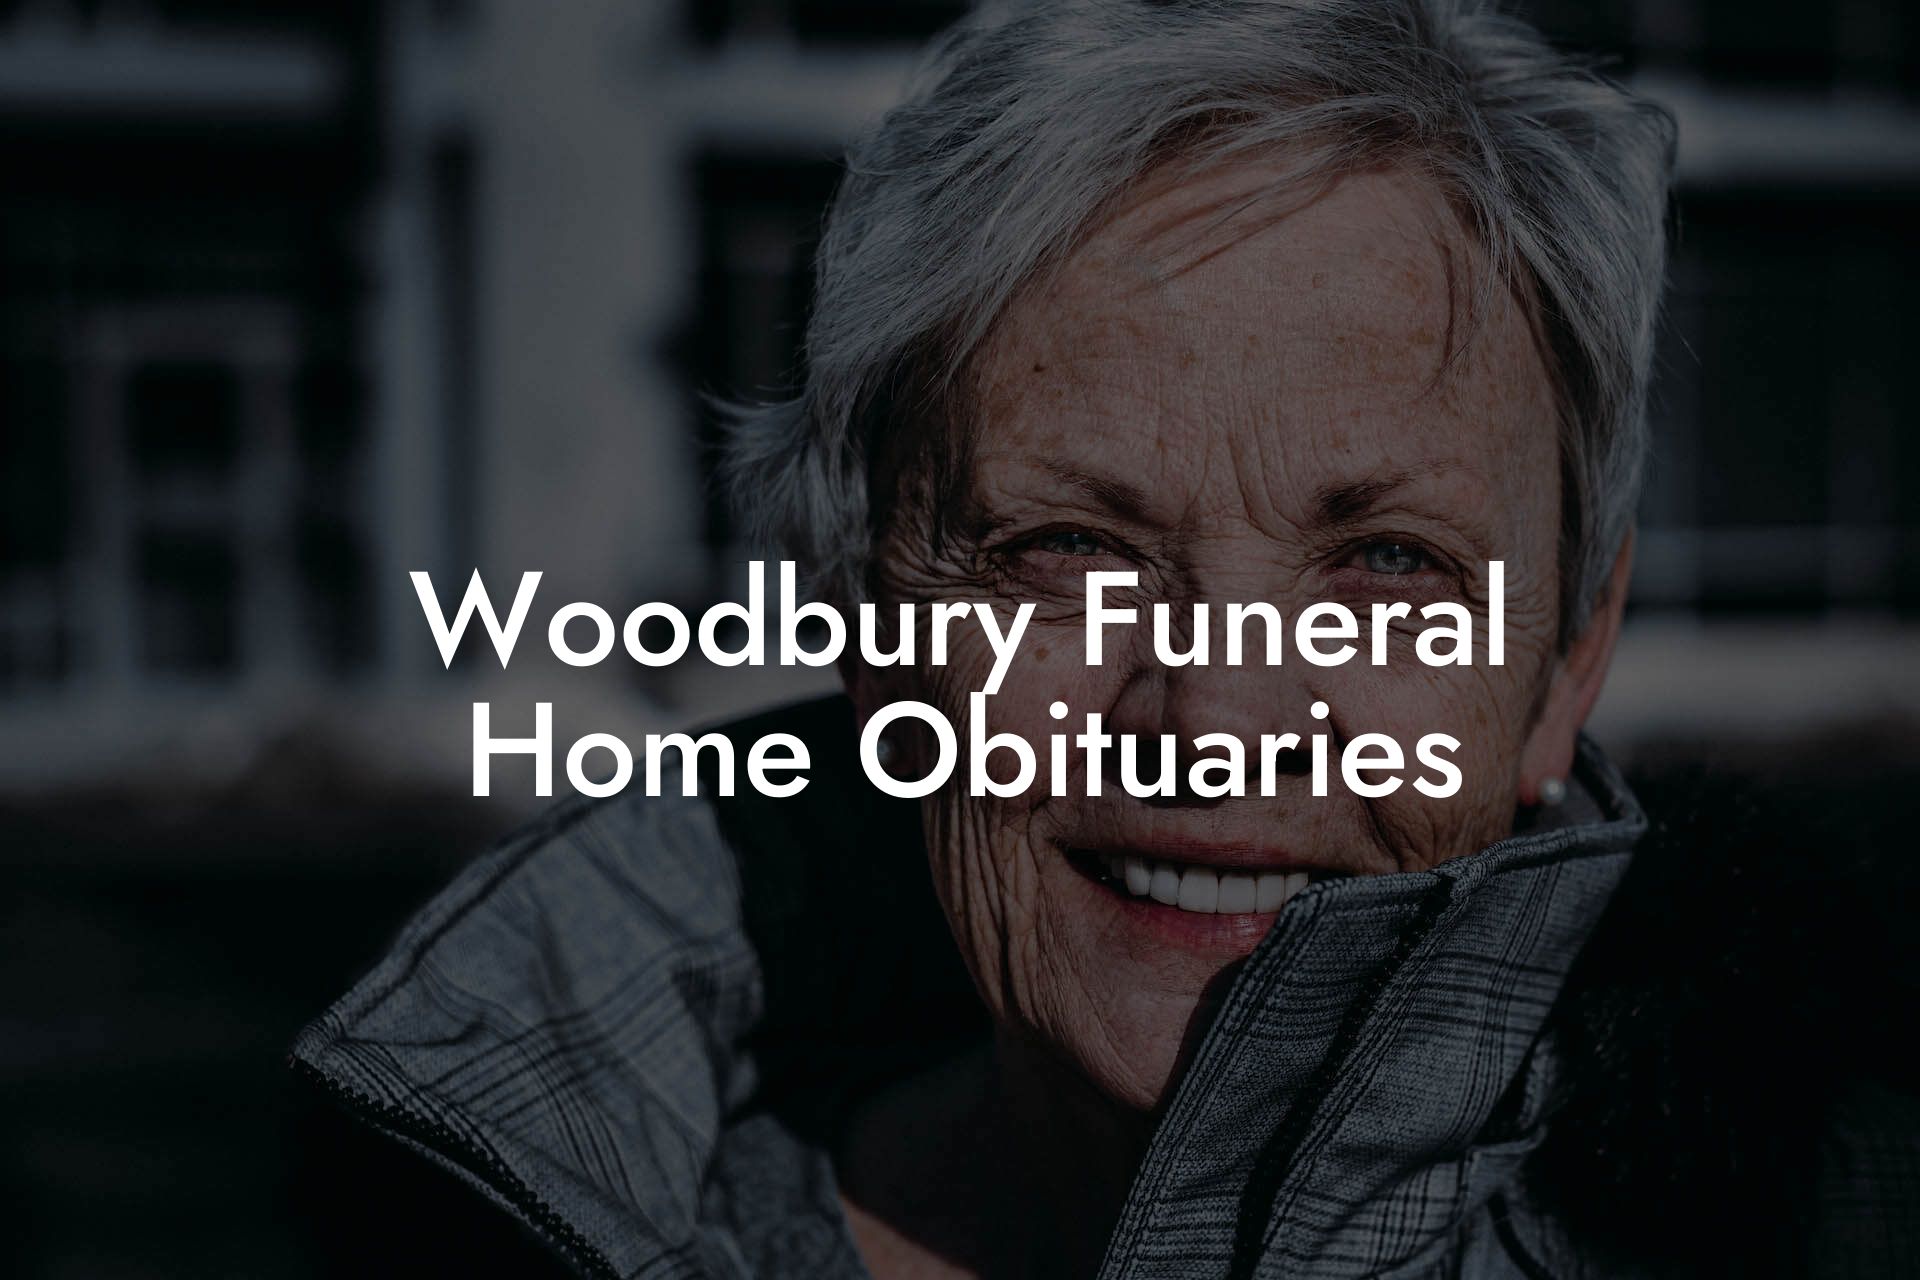 Woodbury Funeral Home Obituaries